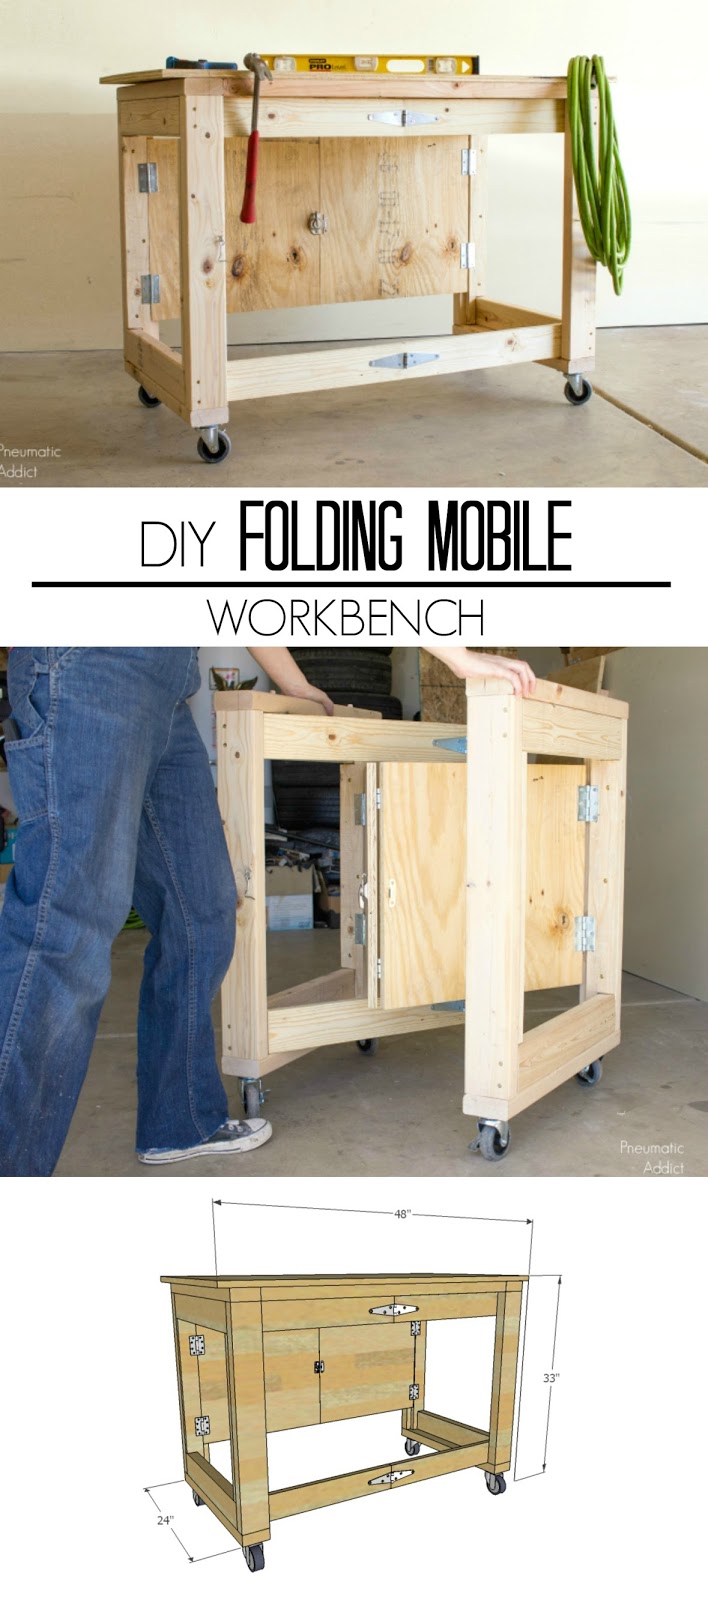 Folding Mobile Workbench - Video Tutorial | Pneumatic Addict